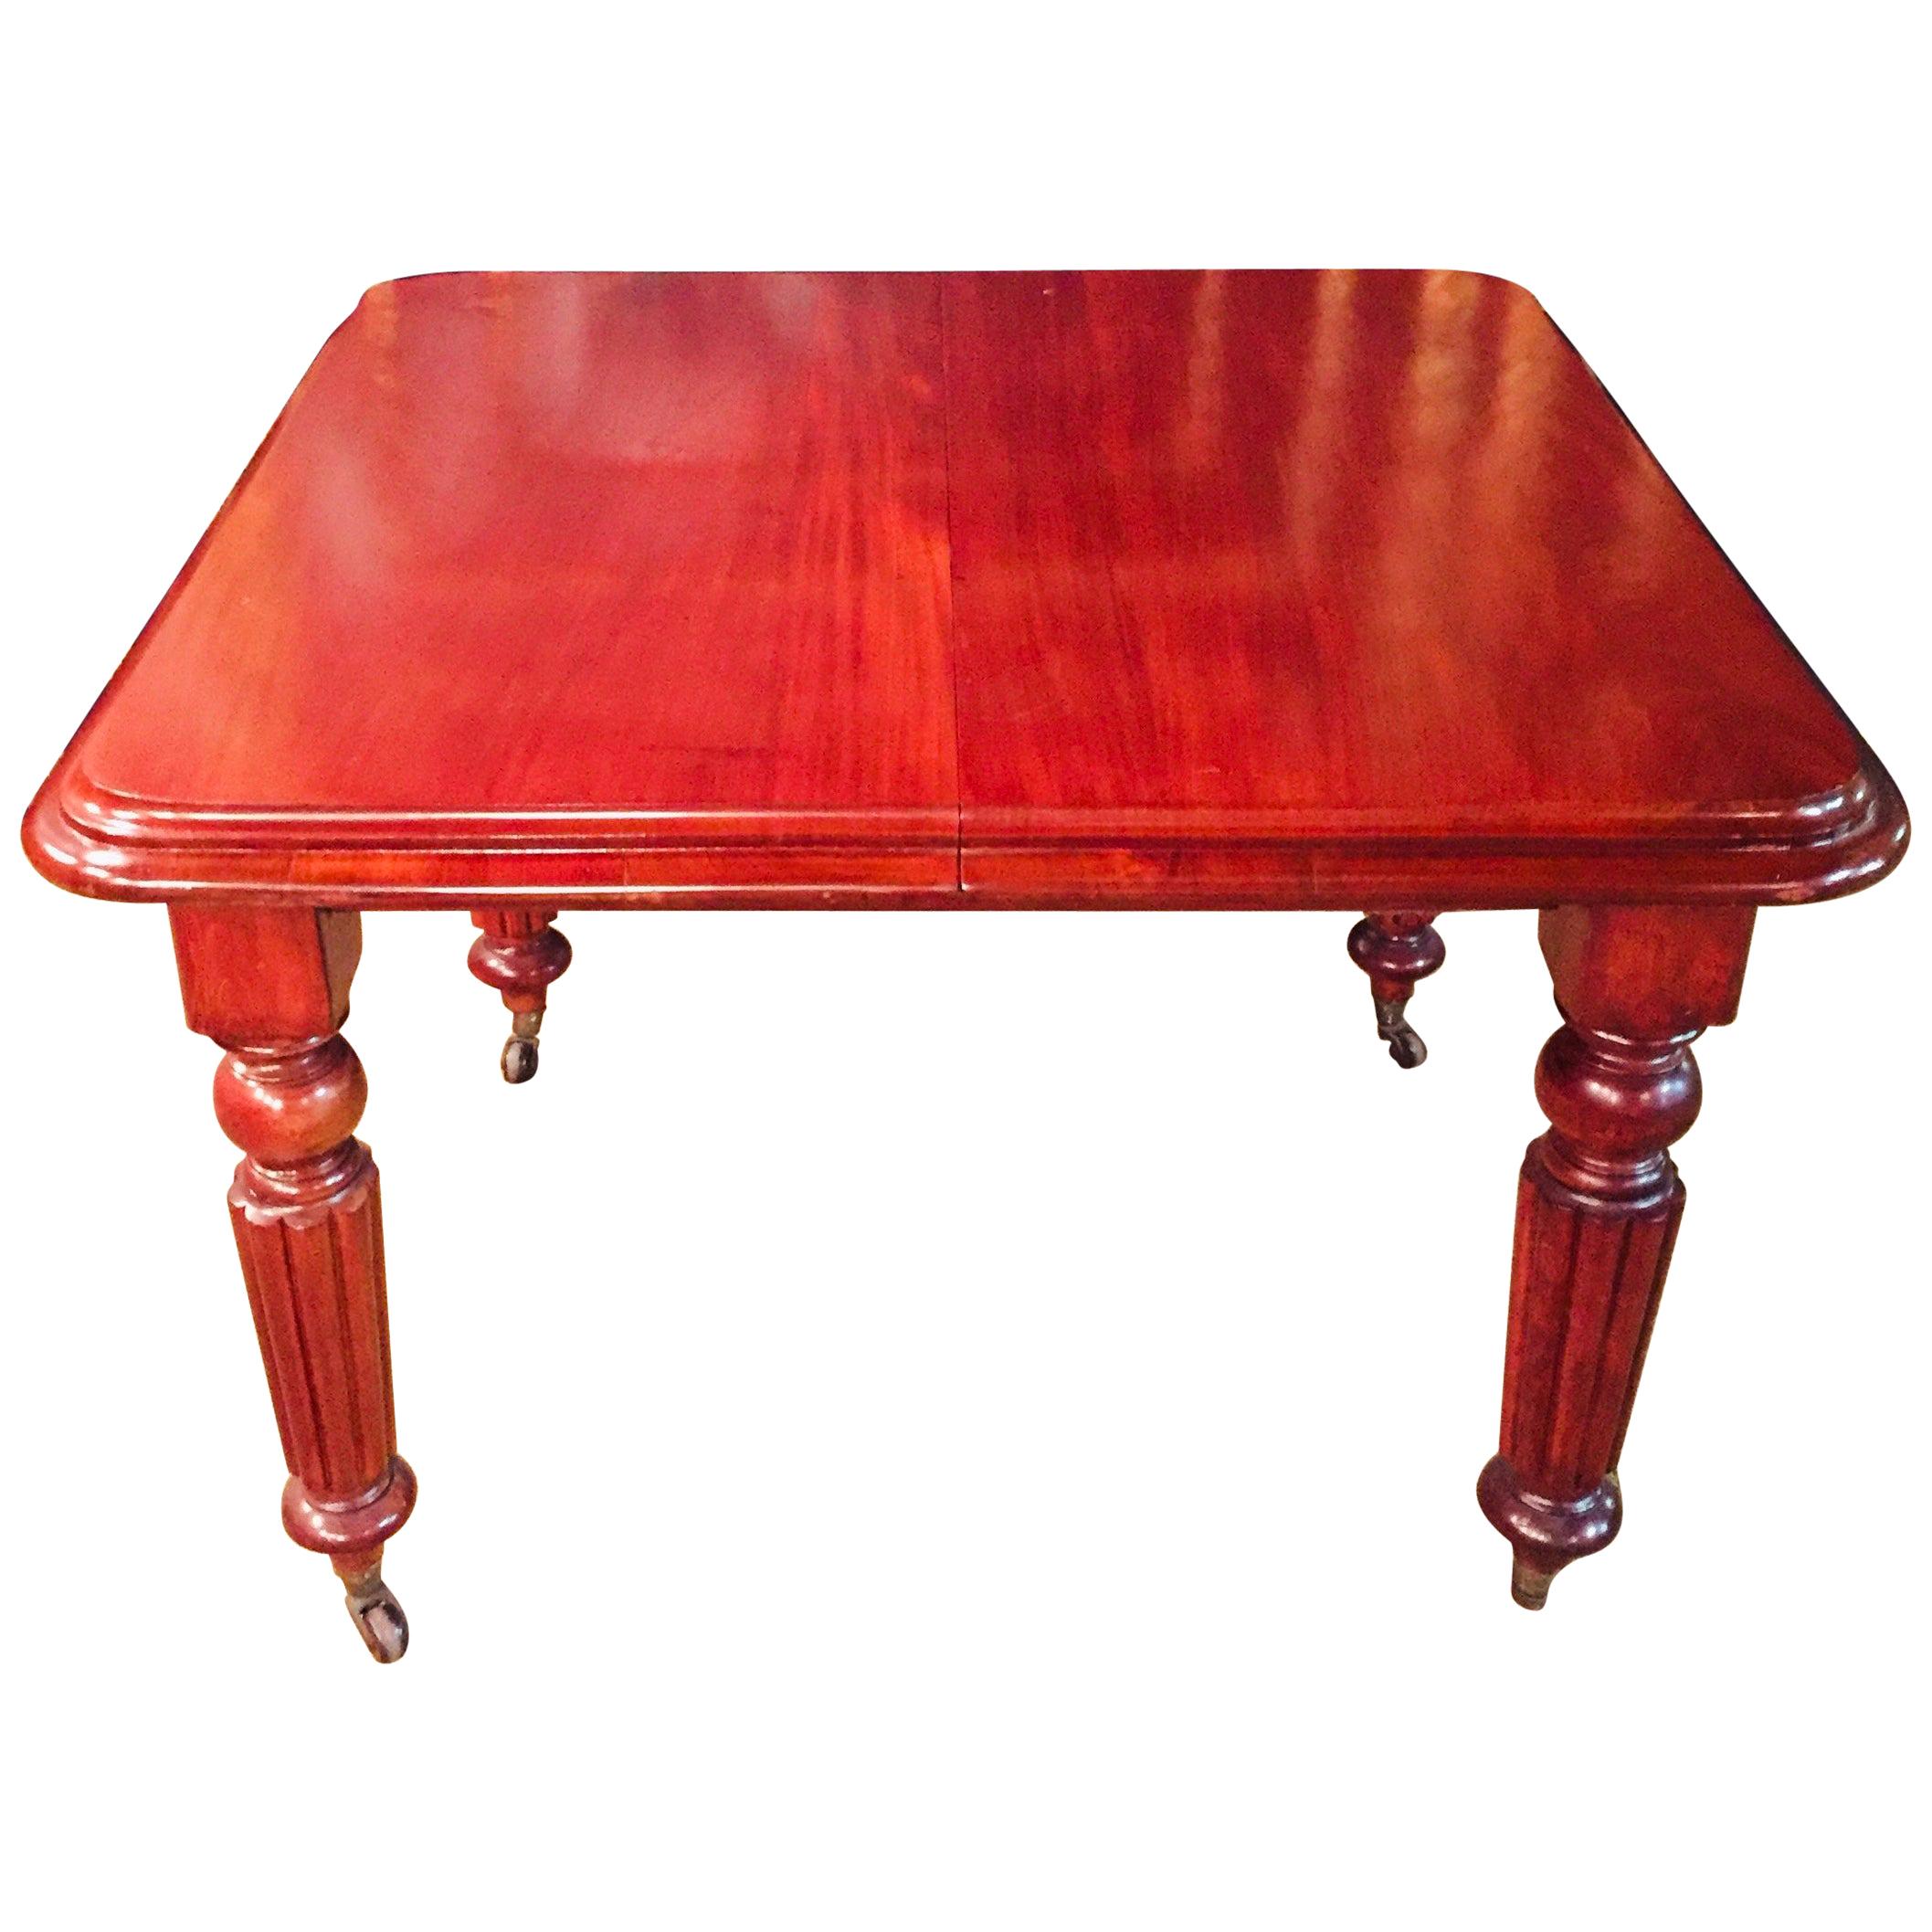 English Table Solid Mahogany circa 1850  Signed.Joseph Fitter